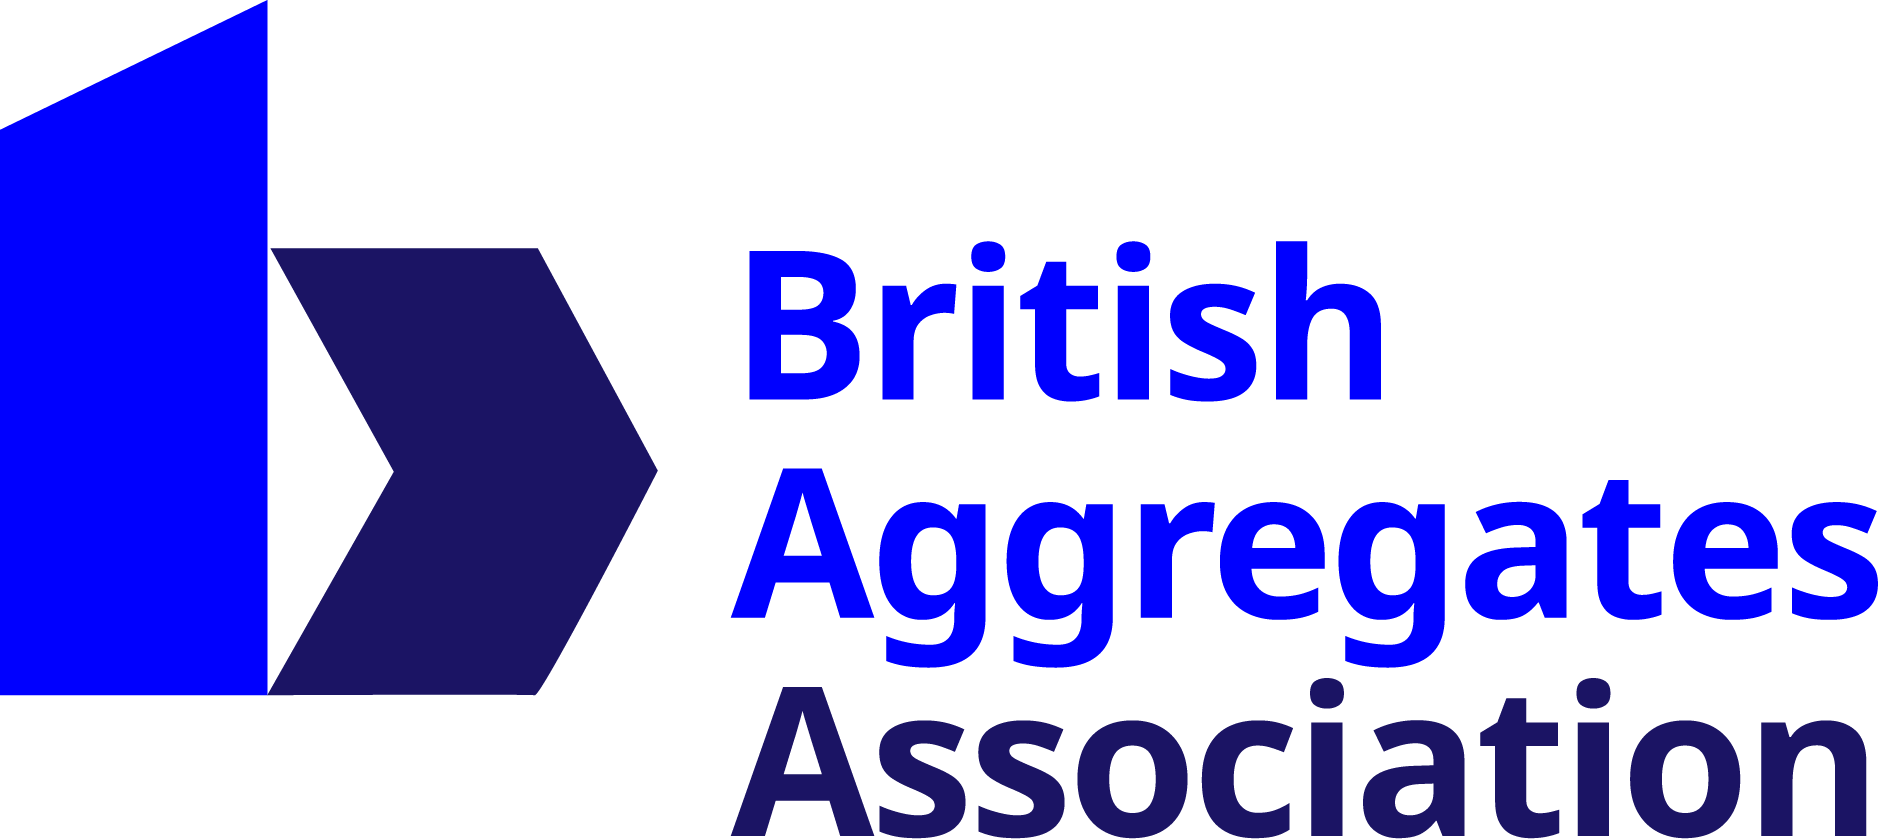 The British Aggregates Association